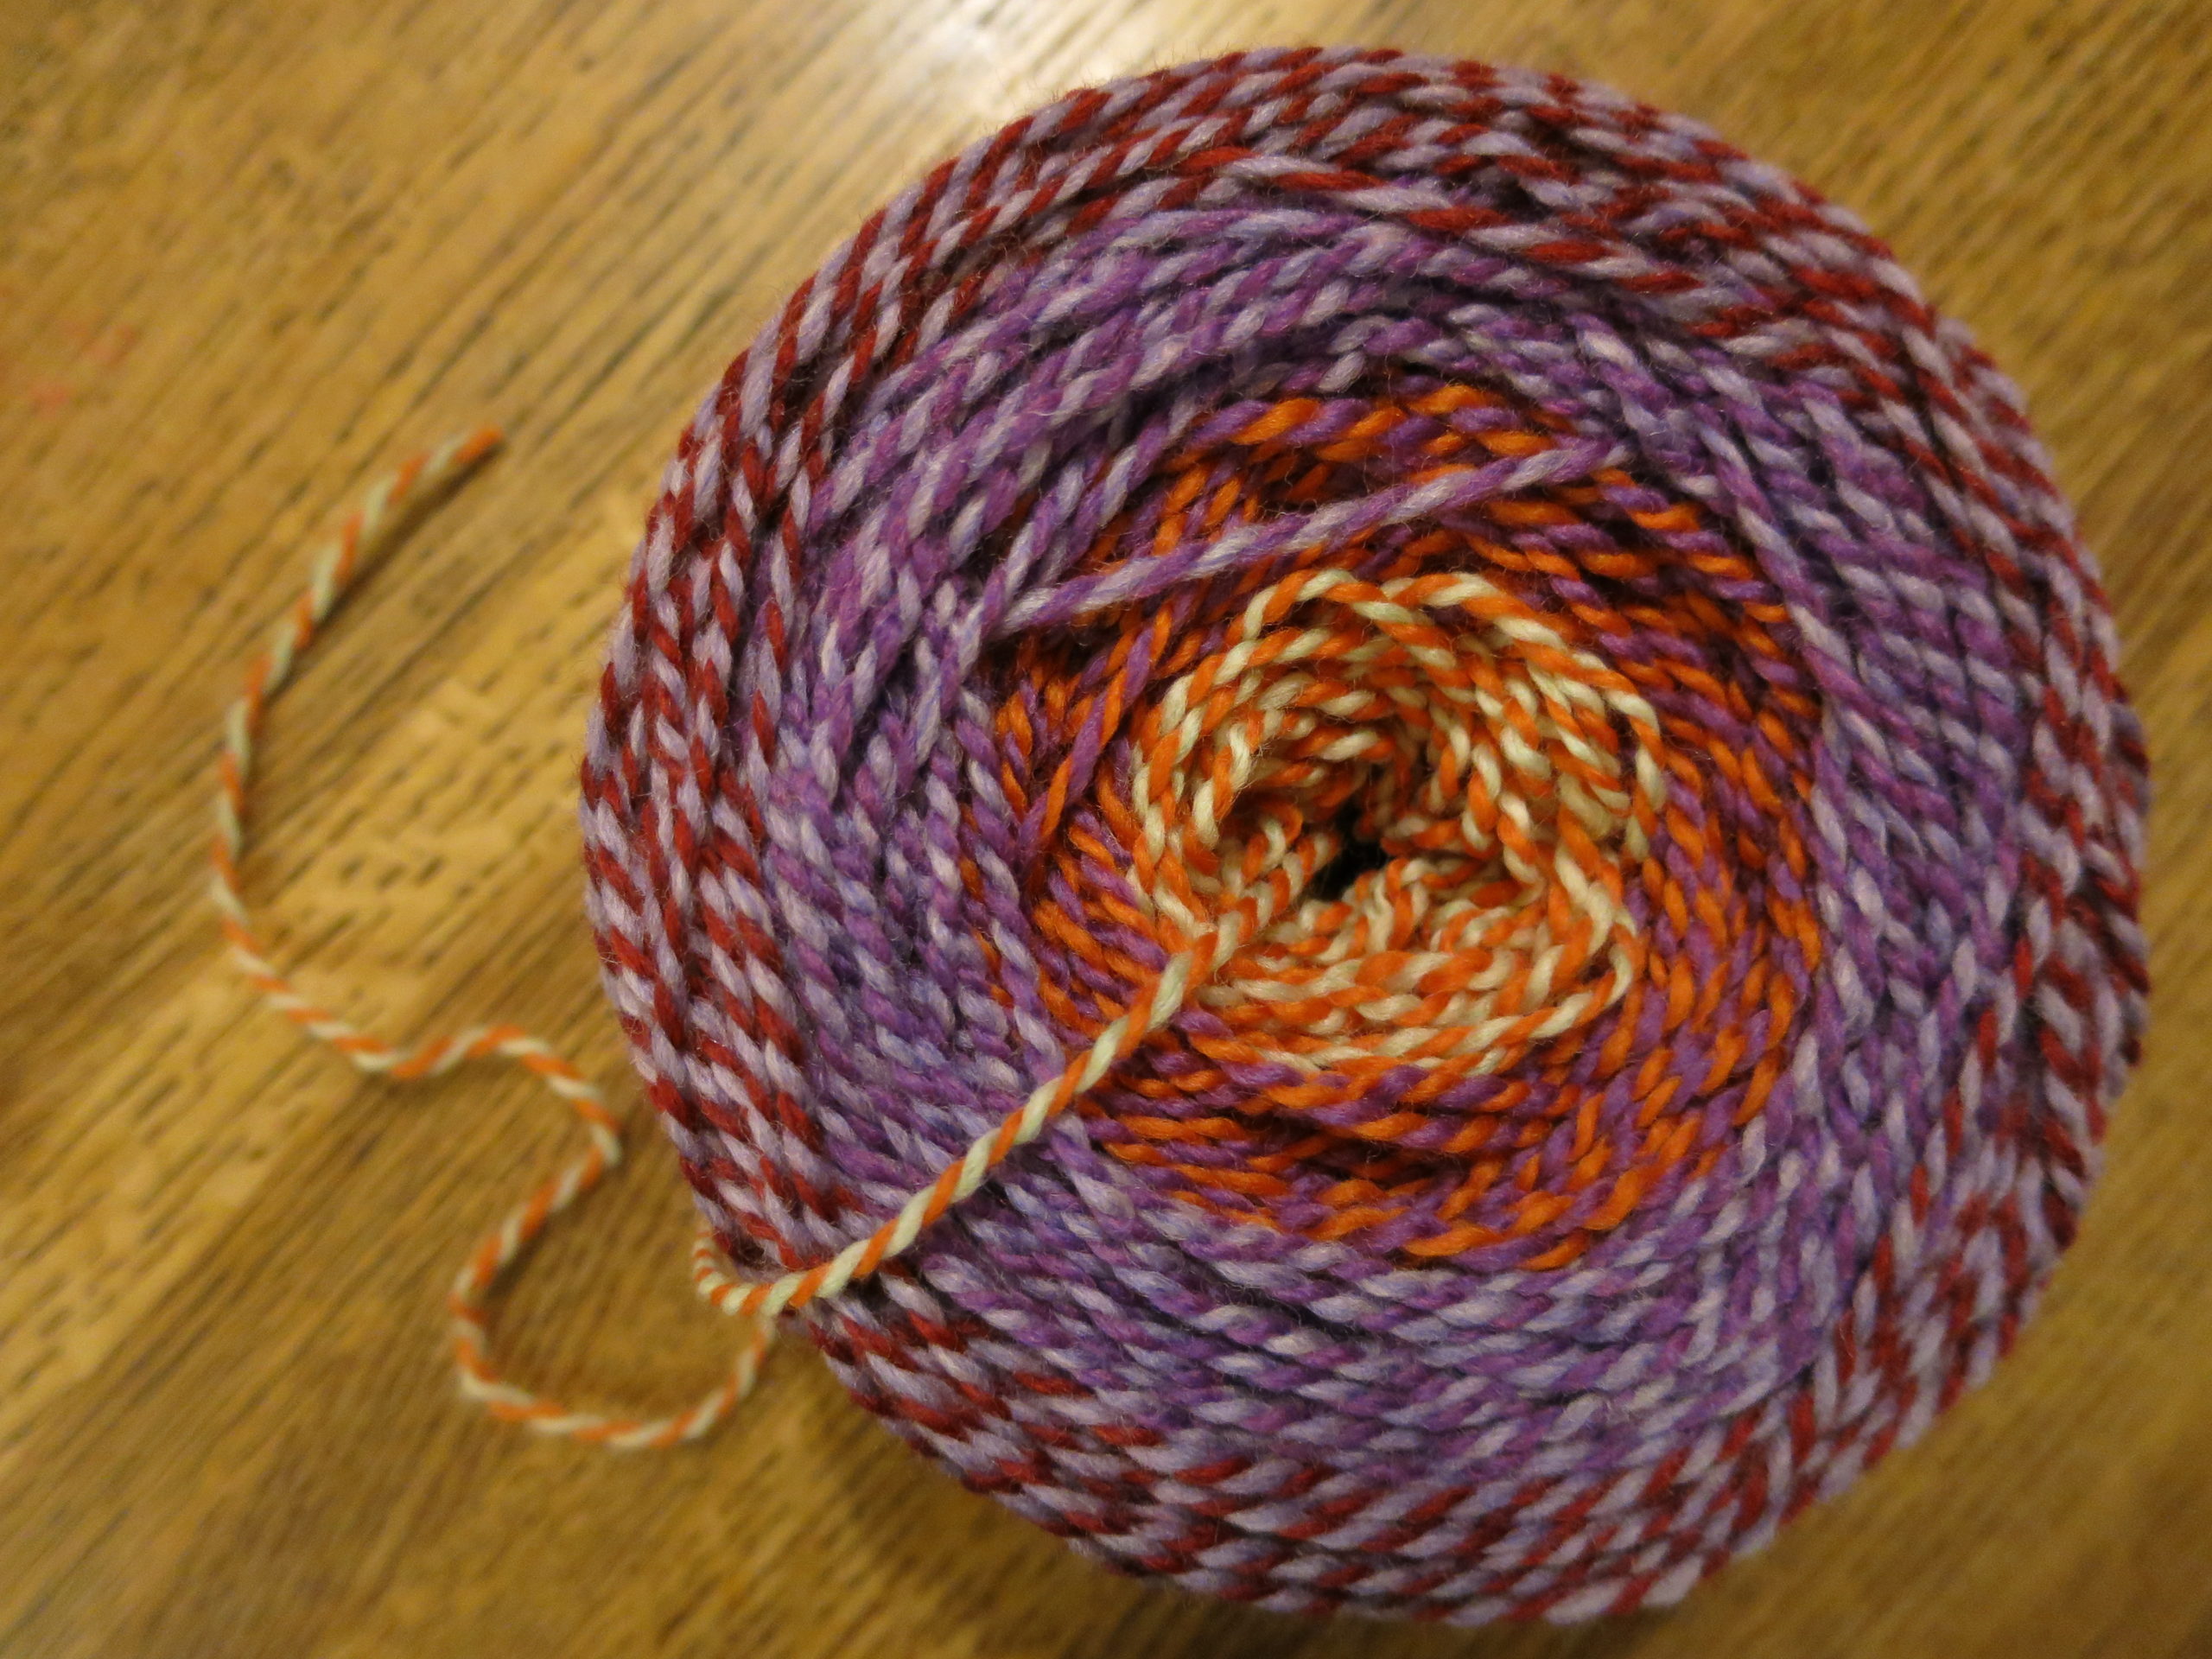 cake of multicolored yarn in purples, orange, dark red, and tan